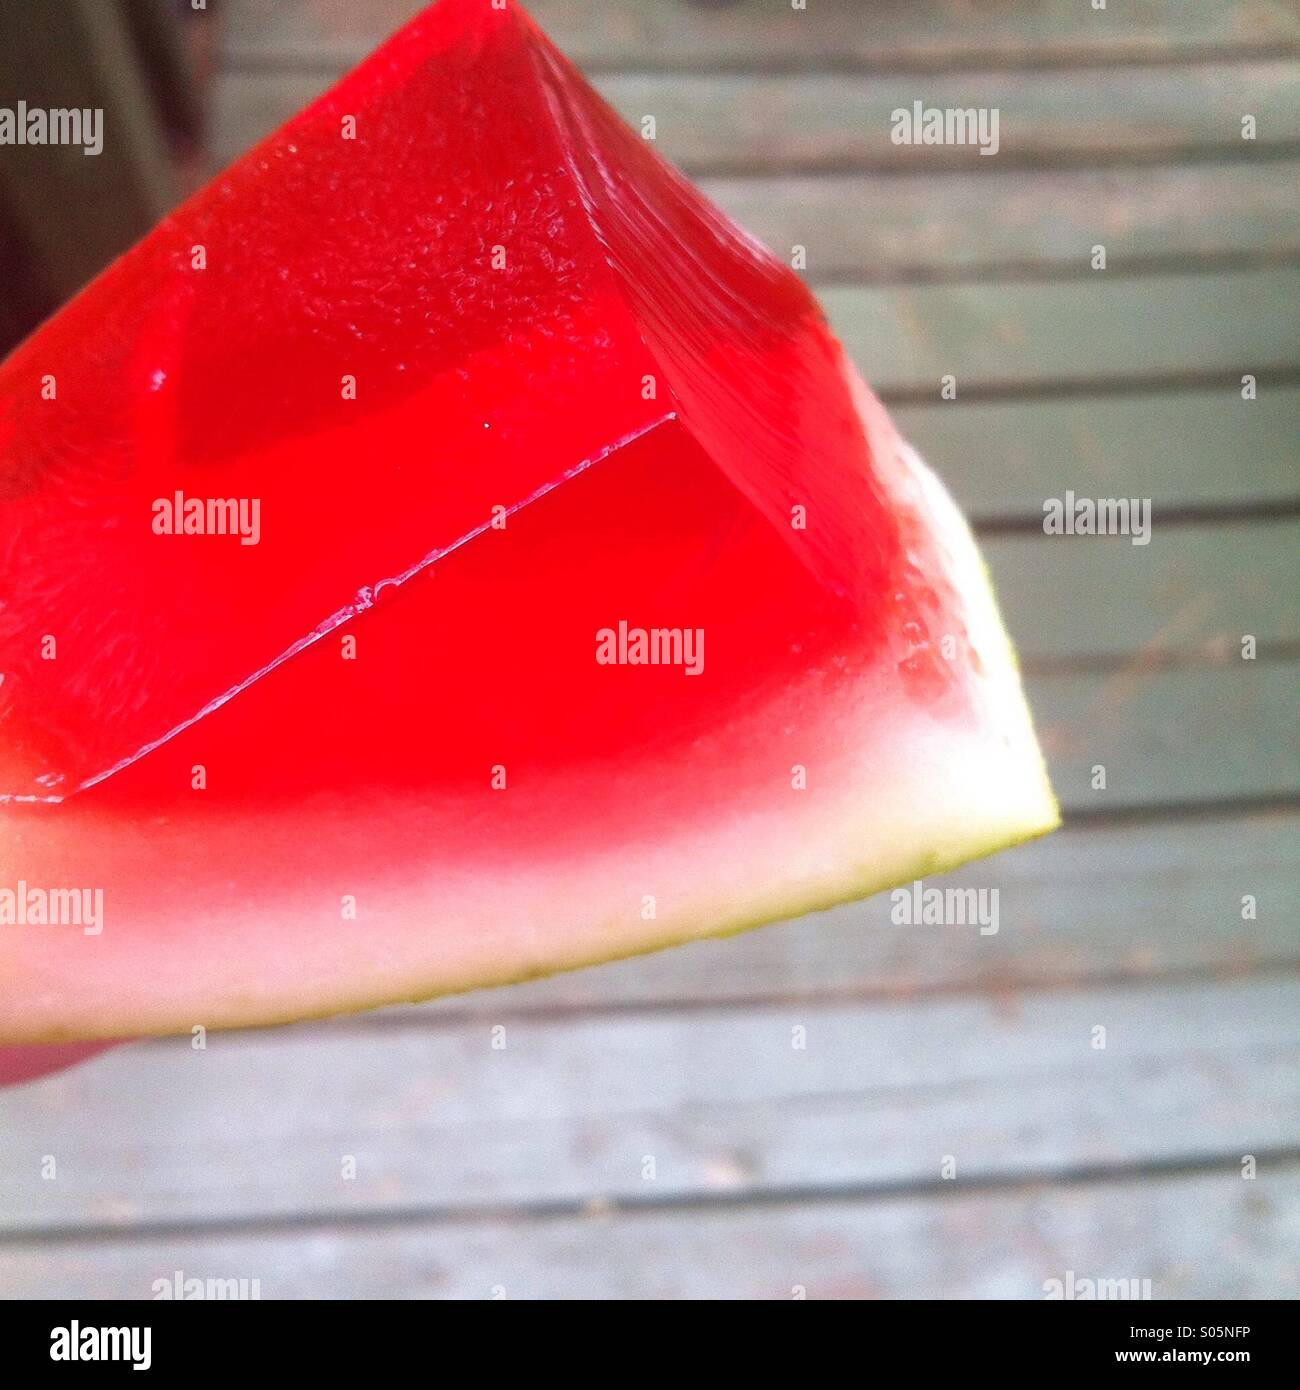 gelatin on a watermelon rind Stock Photo